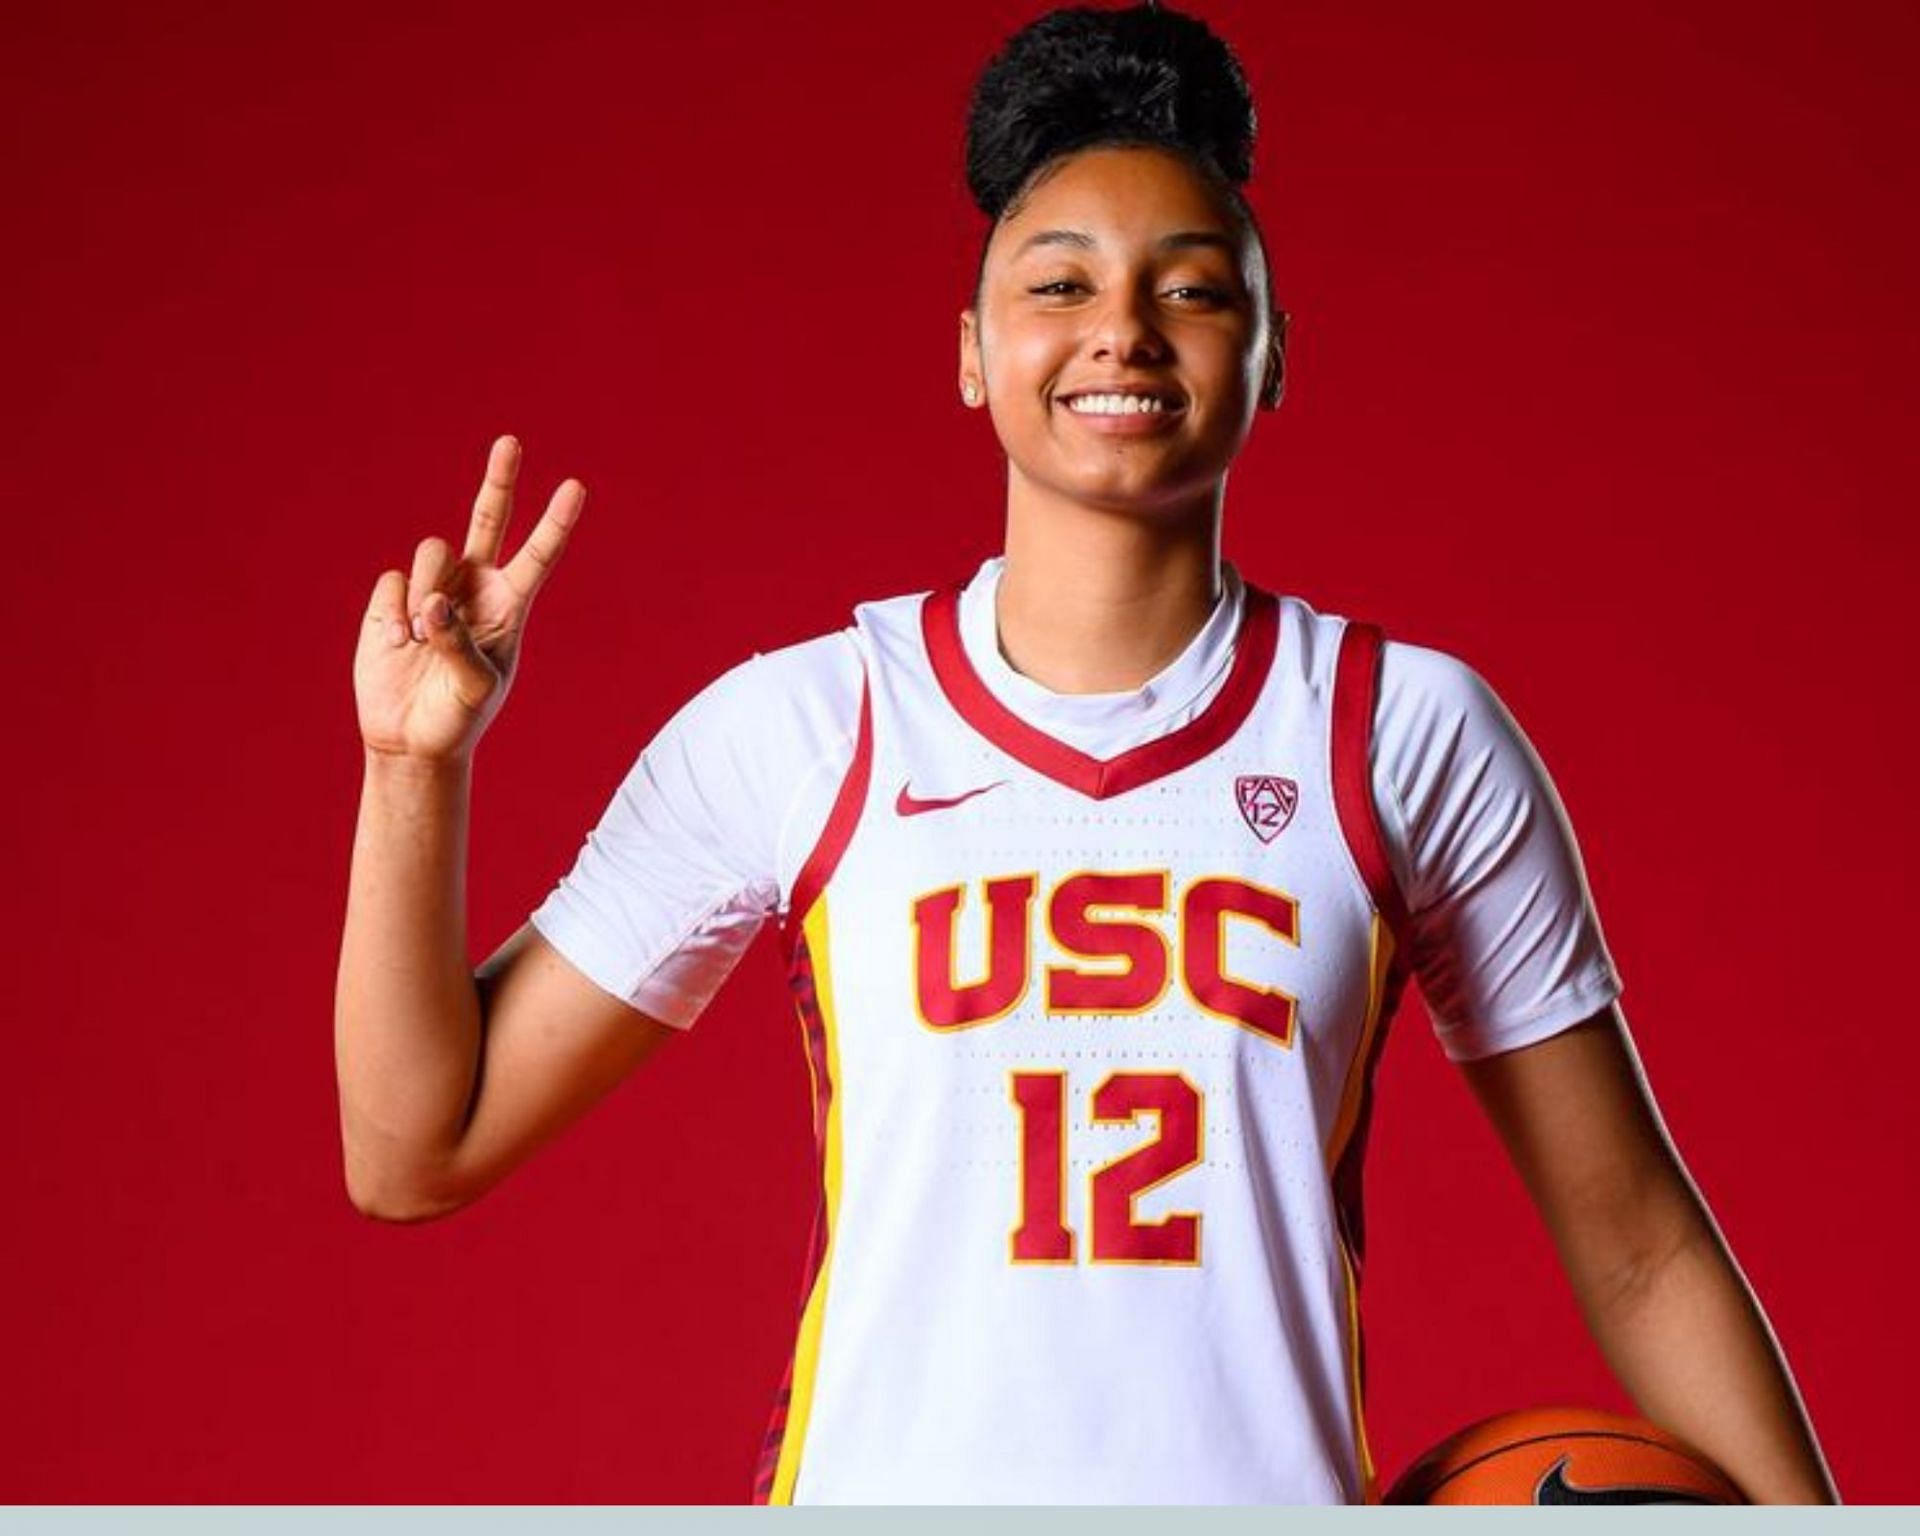 USC prospect and McDonald